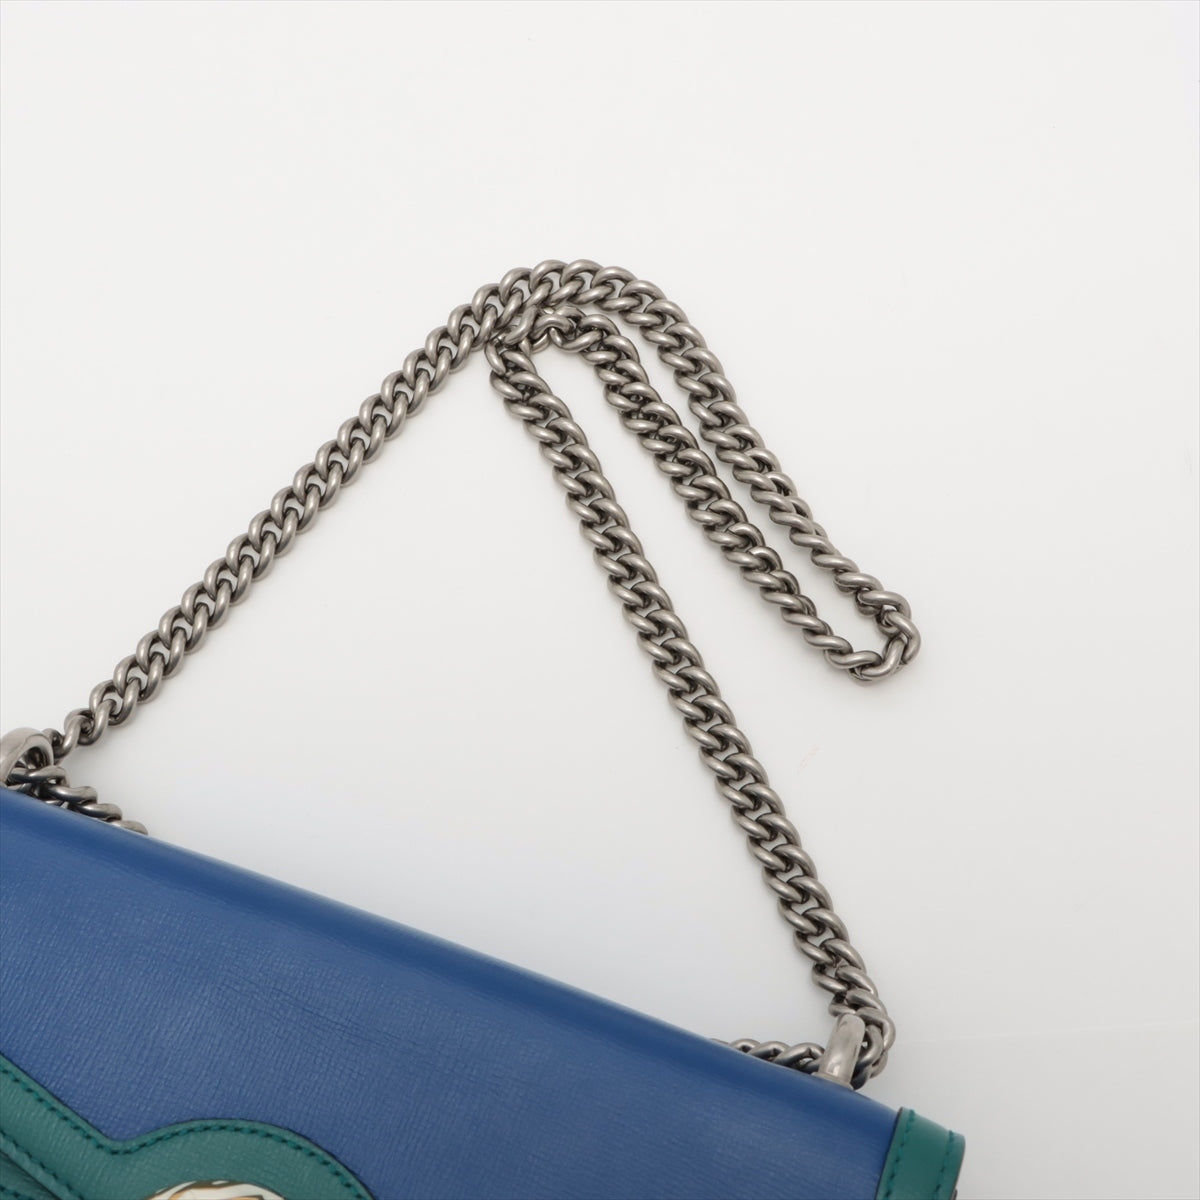 Gucci Dionysus Leather Chain shoulder bag Blue 400249